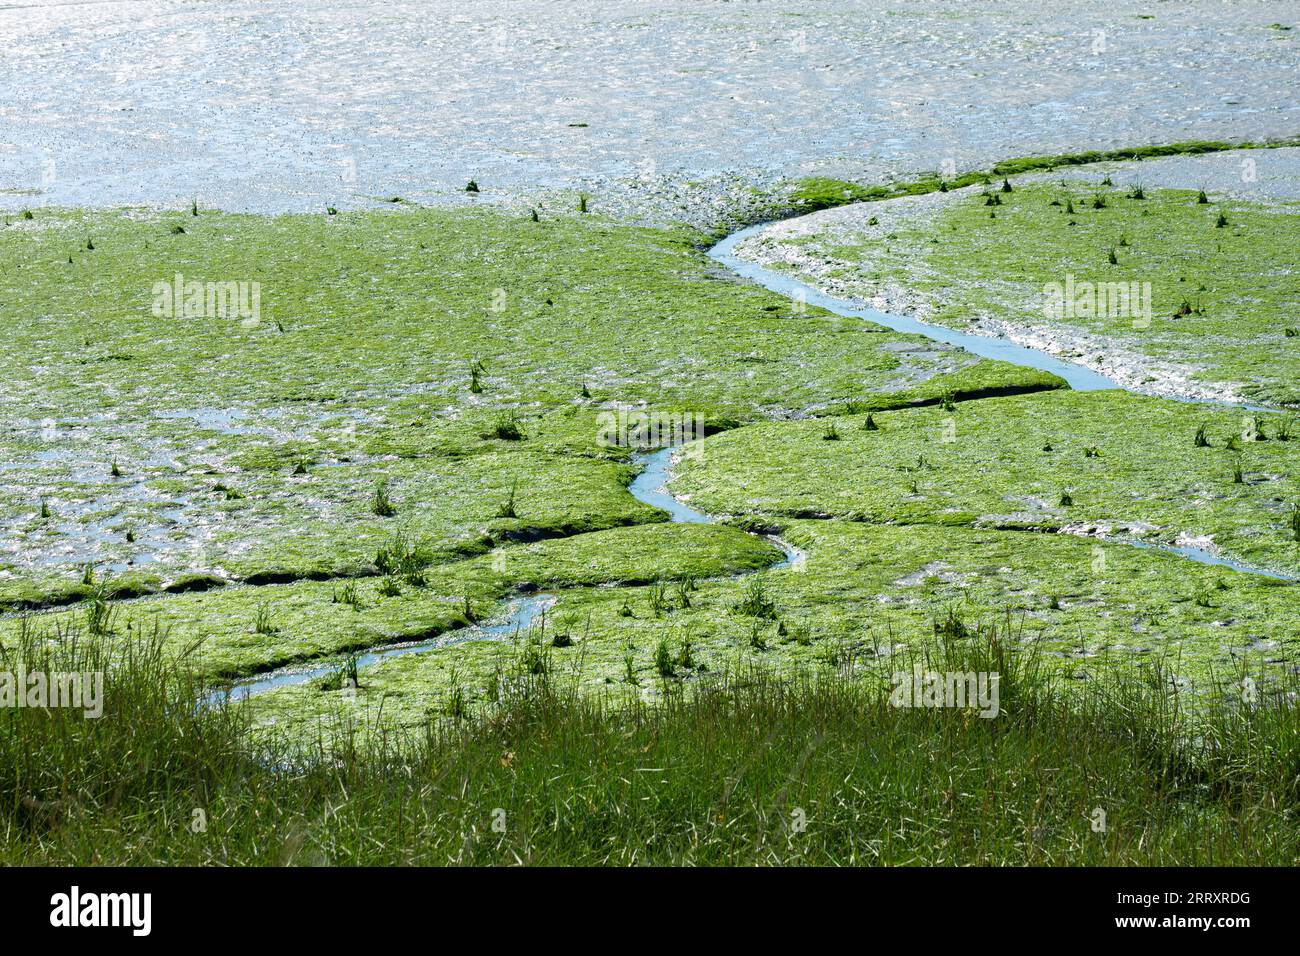 Britain's Coastal Landscapes - Lush Vegetation growing at inter-tidal saltmarshes. Stock Photo